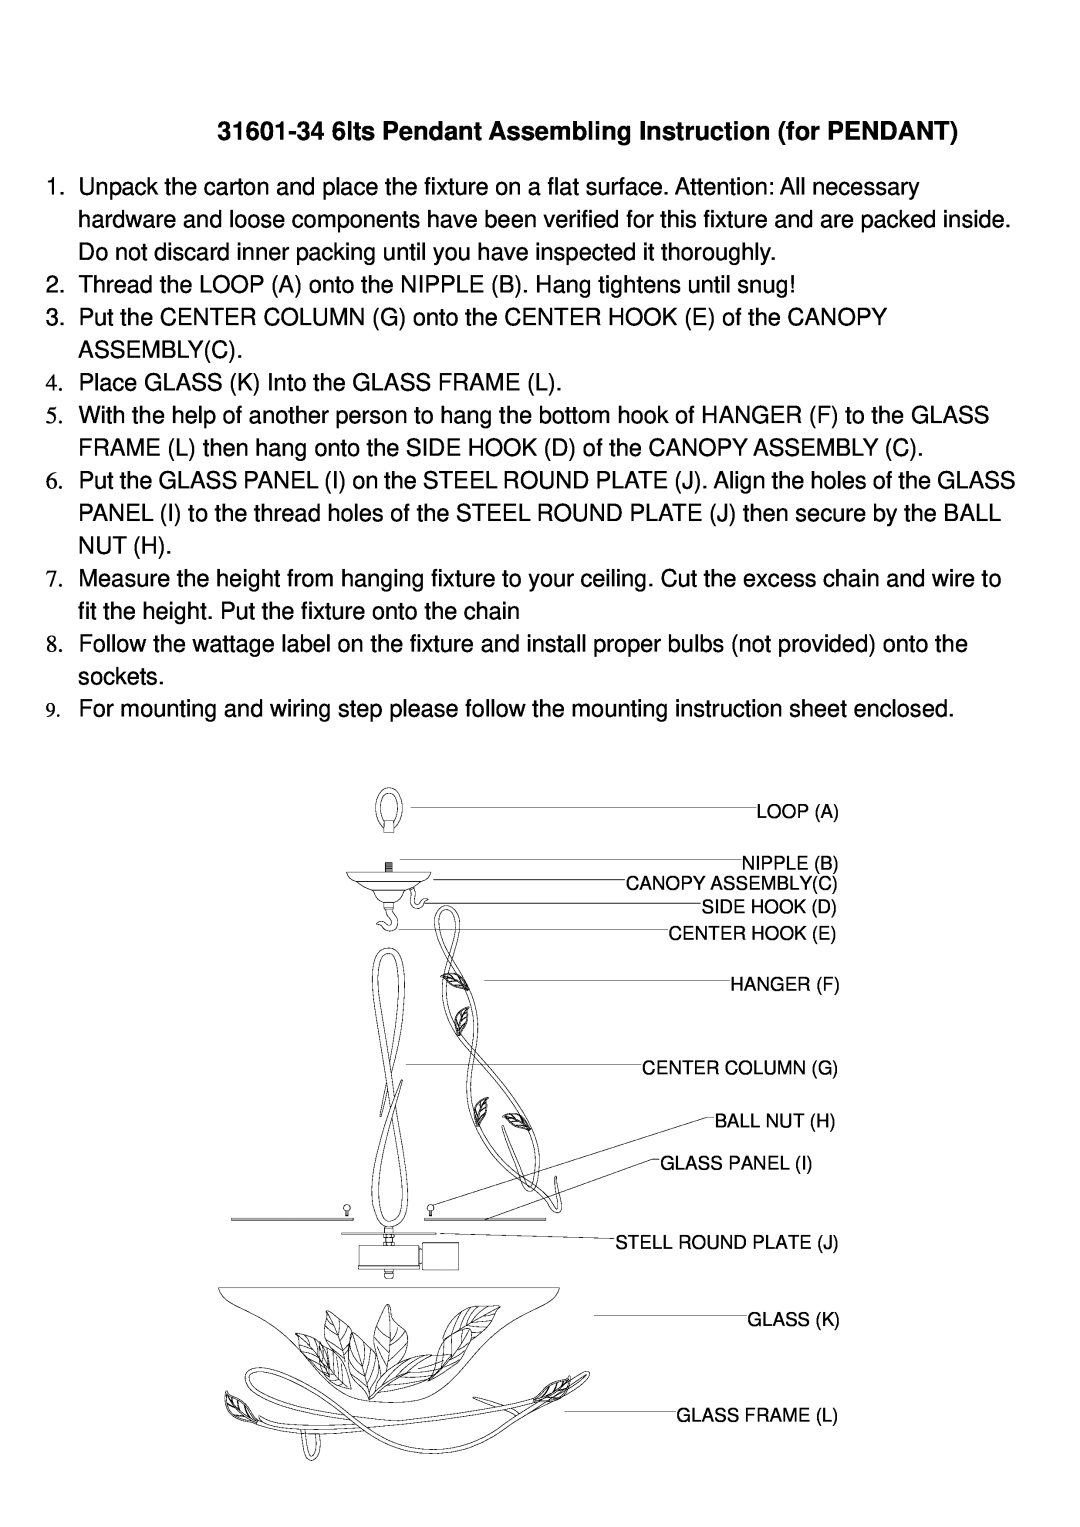 Triarch 31601-34 6lts instruction sheet Place GLASS K Into the GLASS FRAME L 